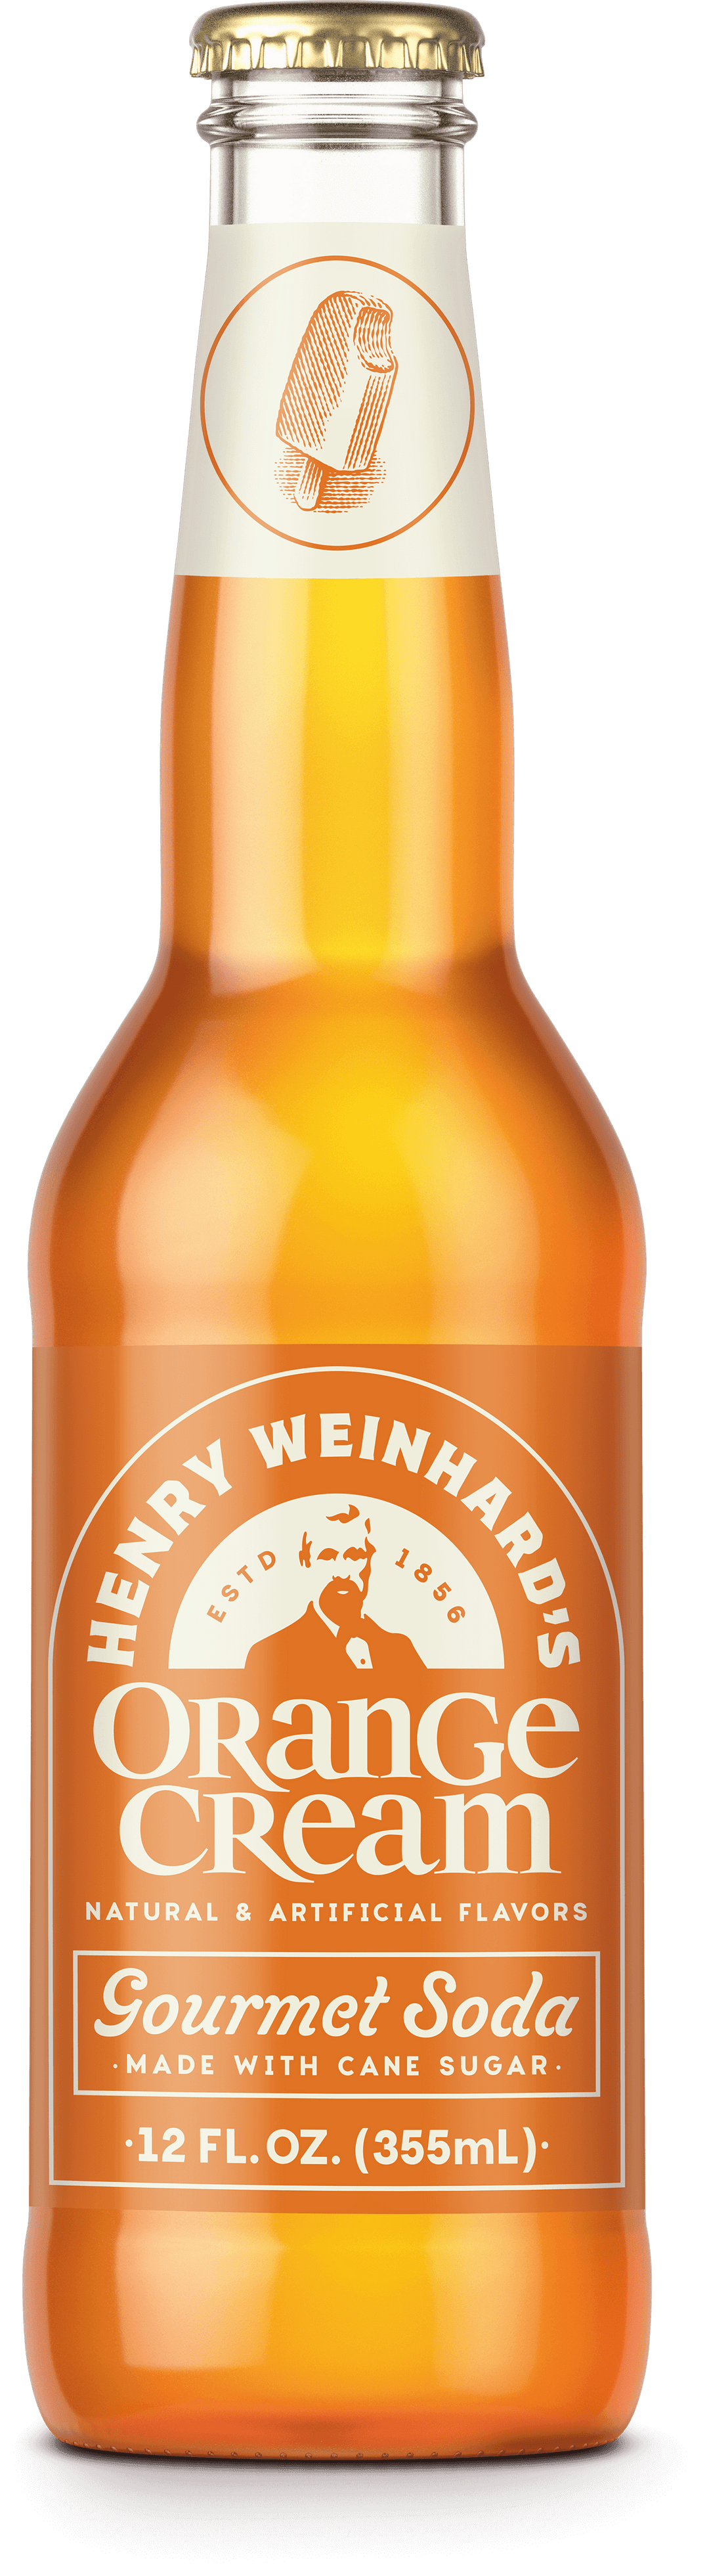 Henry Weinhard’s orange cream gourmet soda